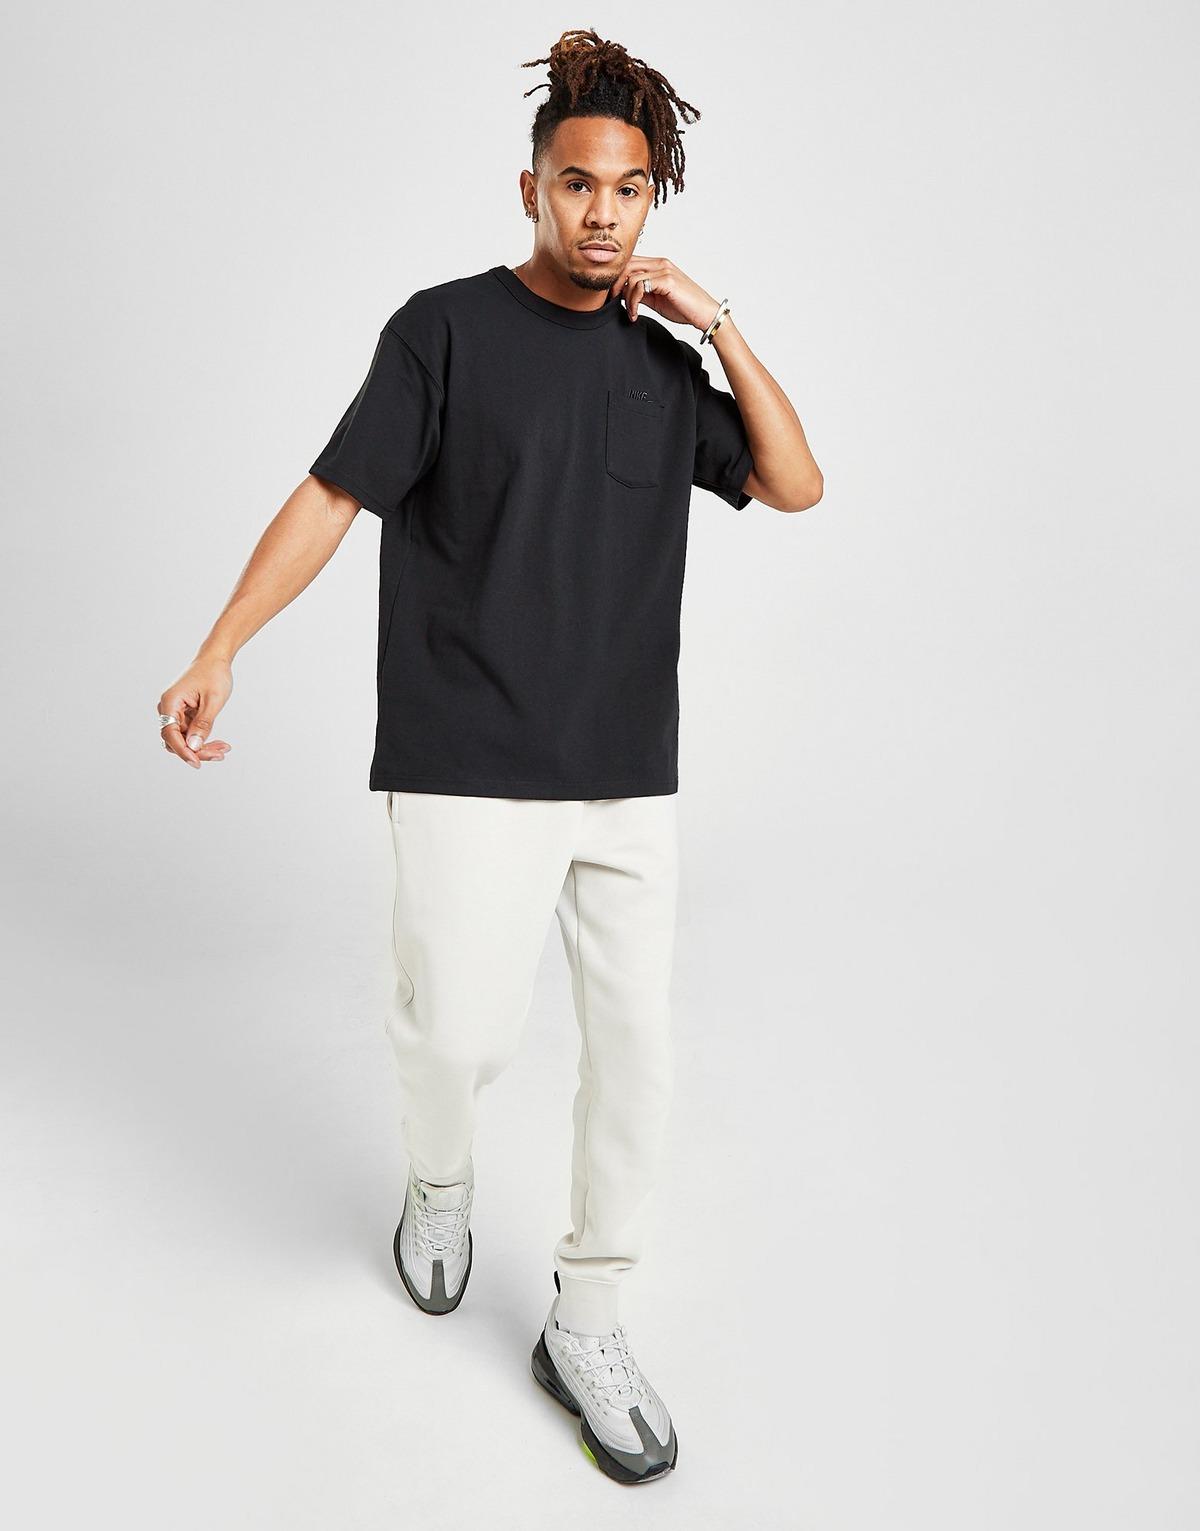 Nike Cotton Essential Pocket T-shirt in Black/Black (Black) for Men - Lyst